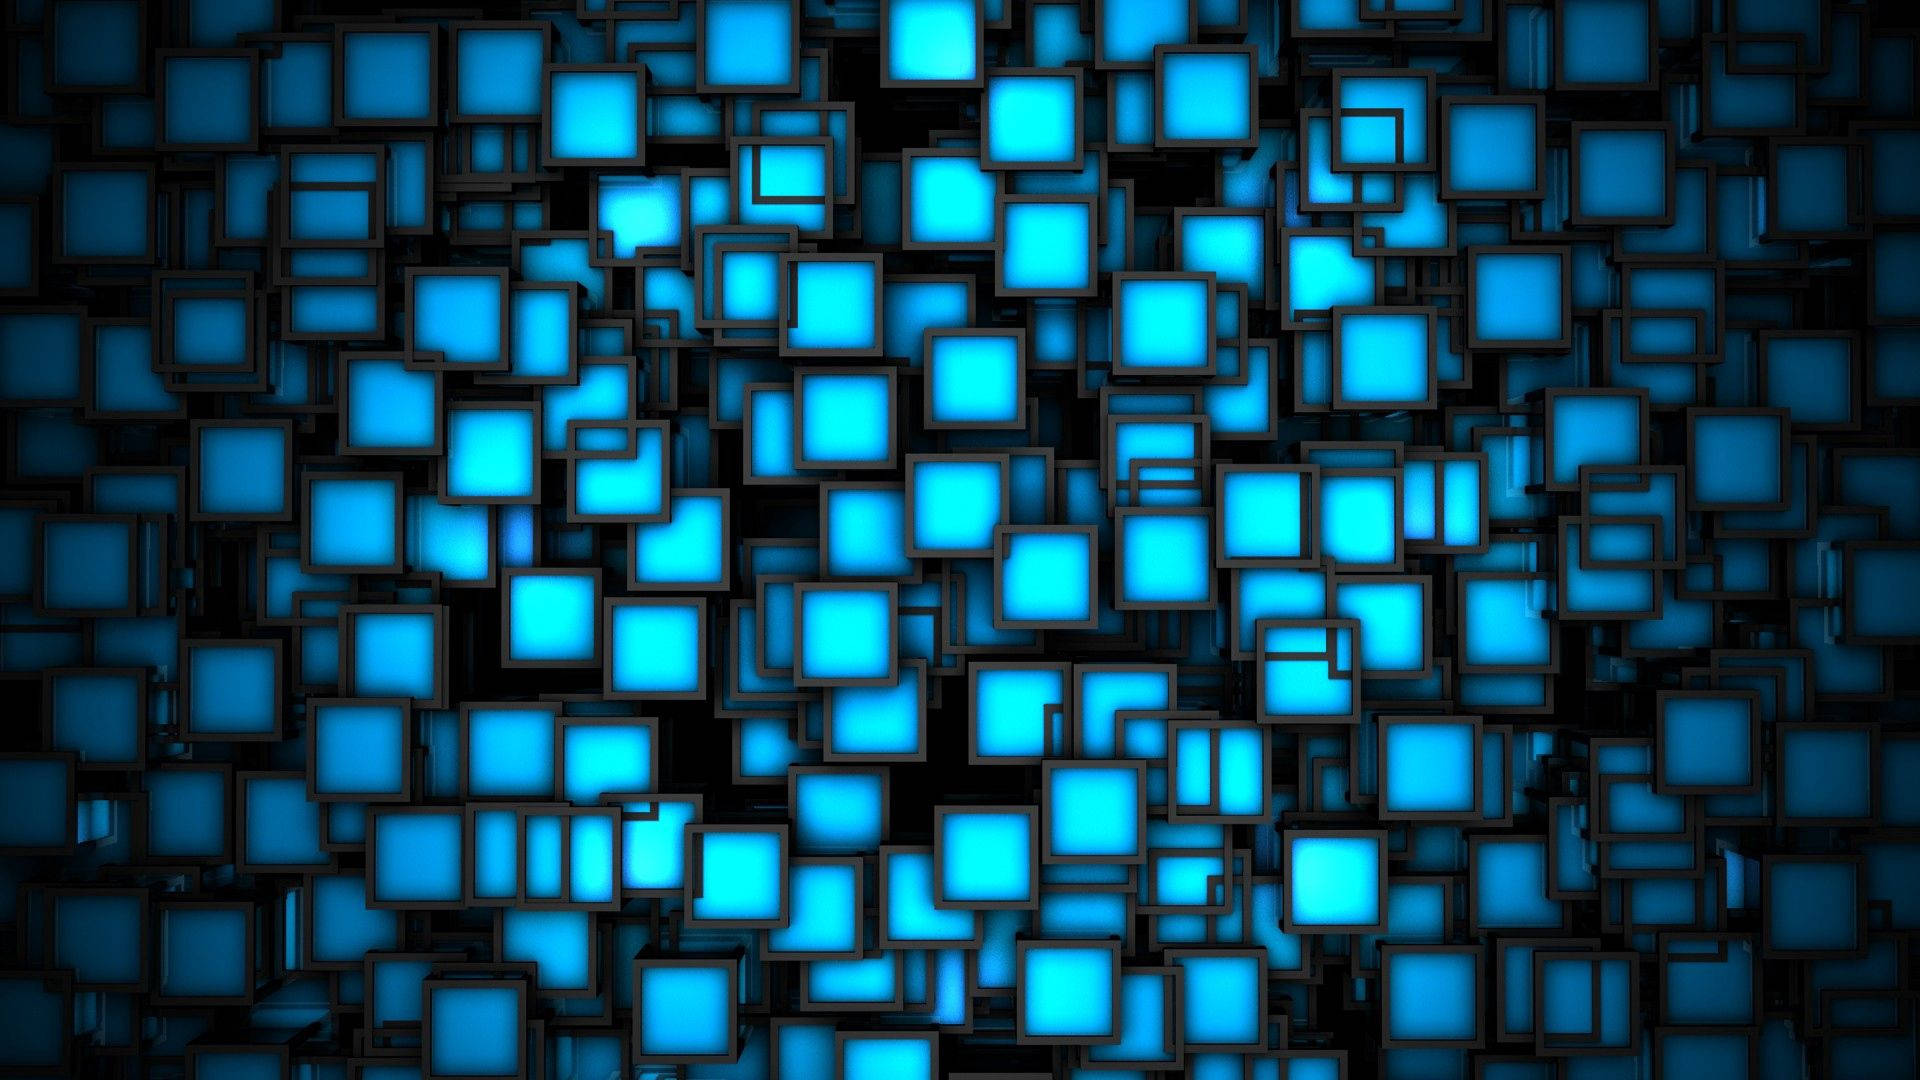 Blue Squares In Black